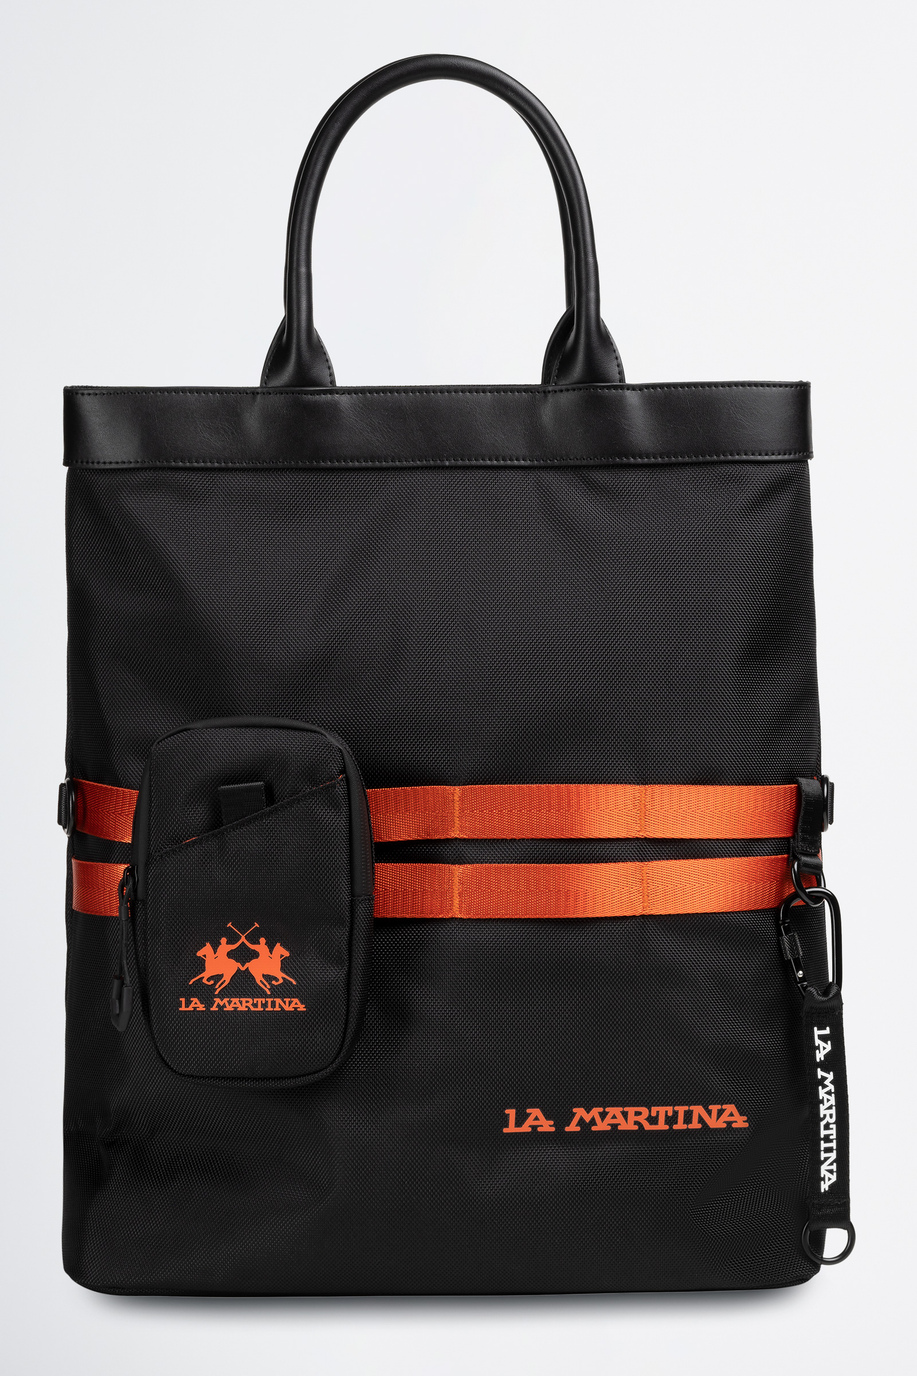 Herren Tasche aus synthetischem Gewebe - presale | La Martina - Official Online Shop